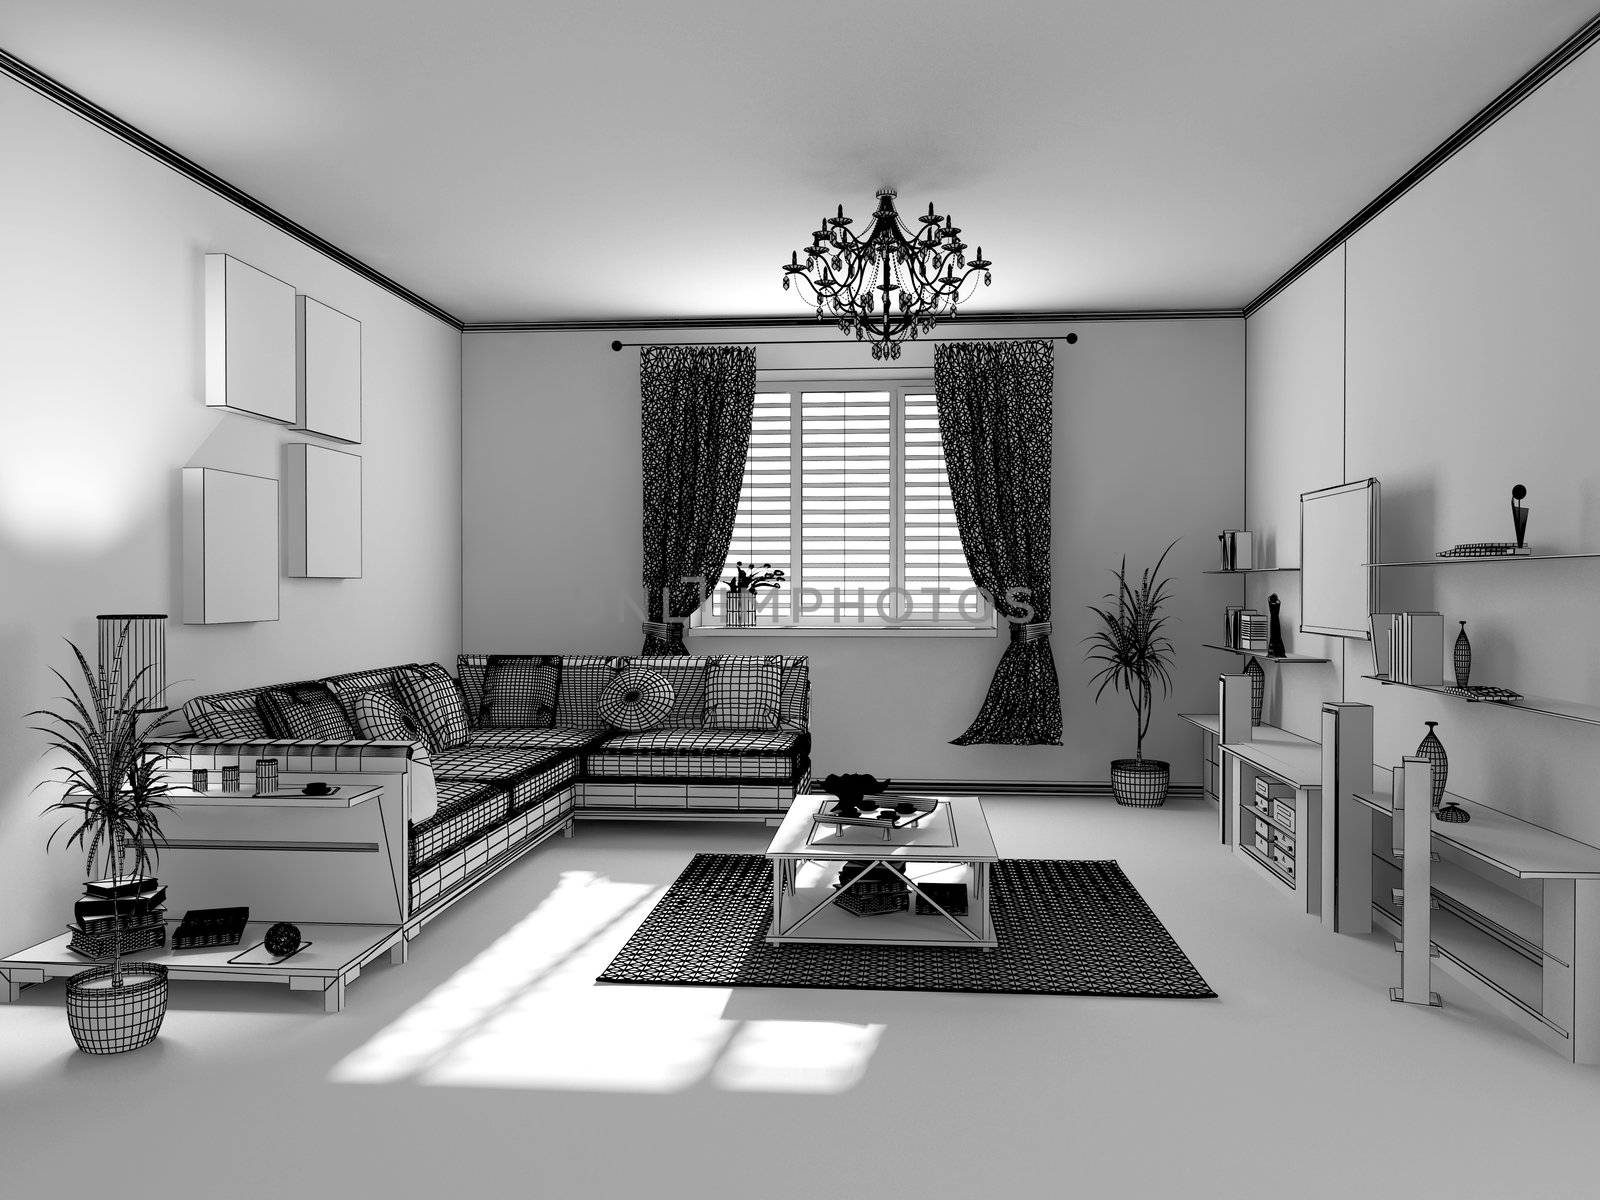 the modern interior sketch (wireframe rendering)